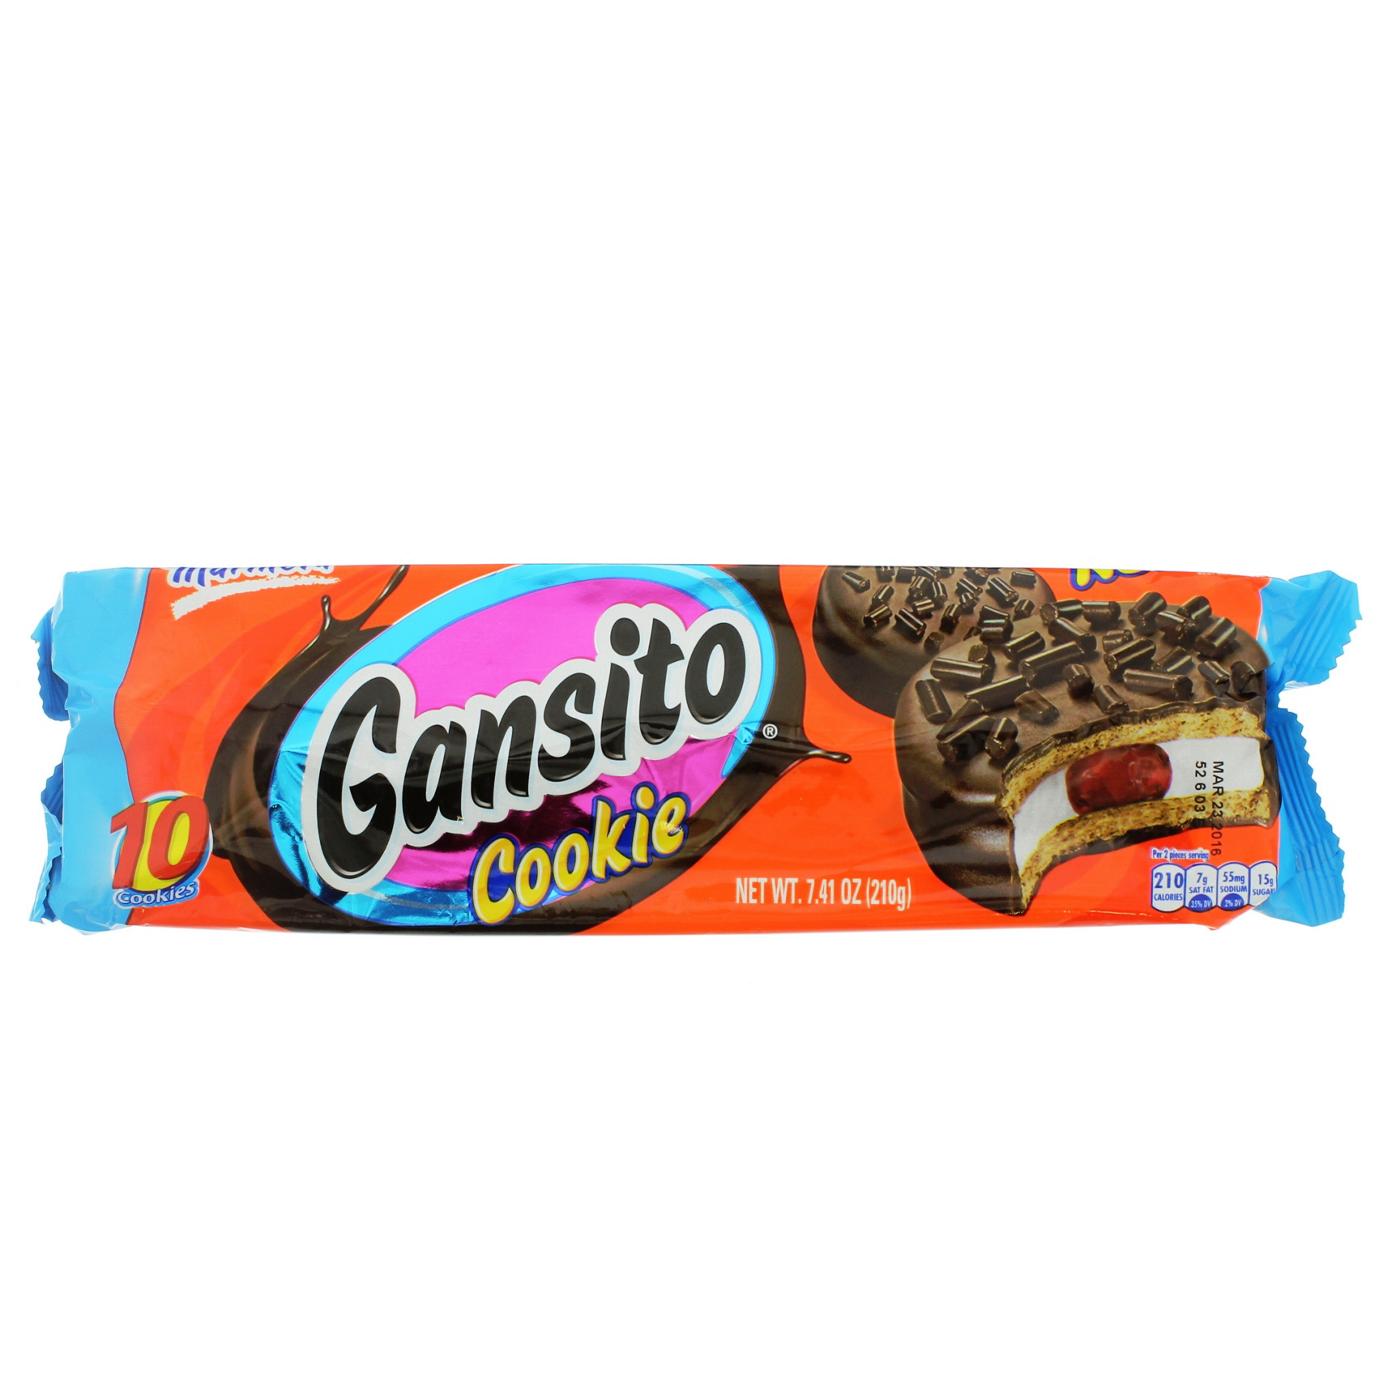 Marinela Gansito Cookies; image 1 of 2